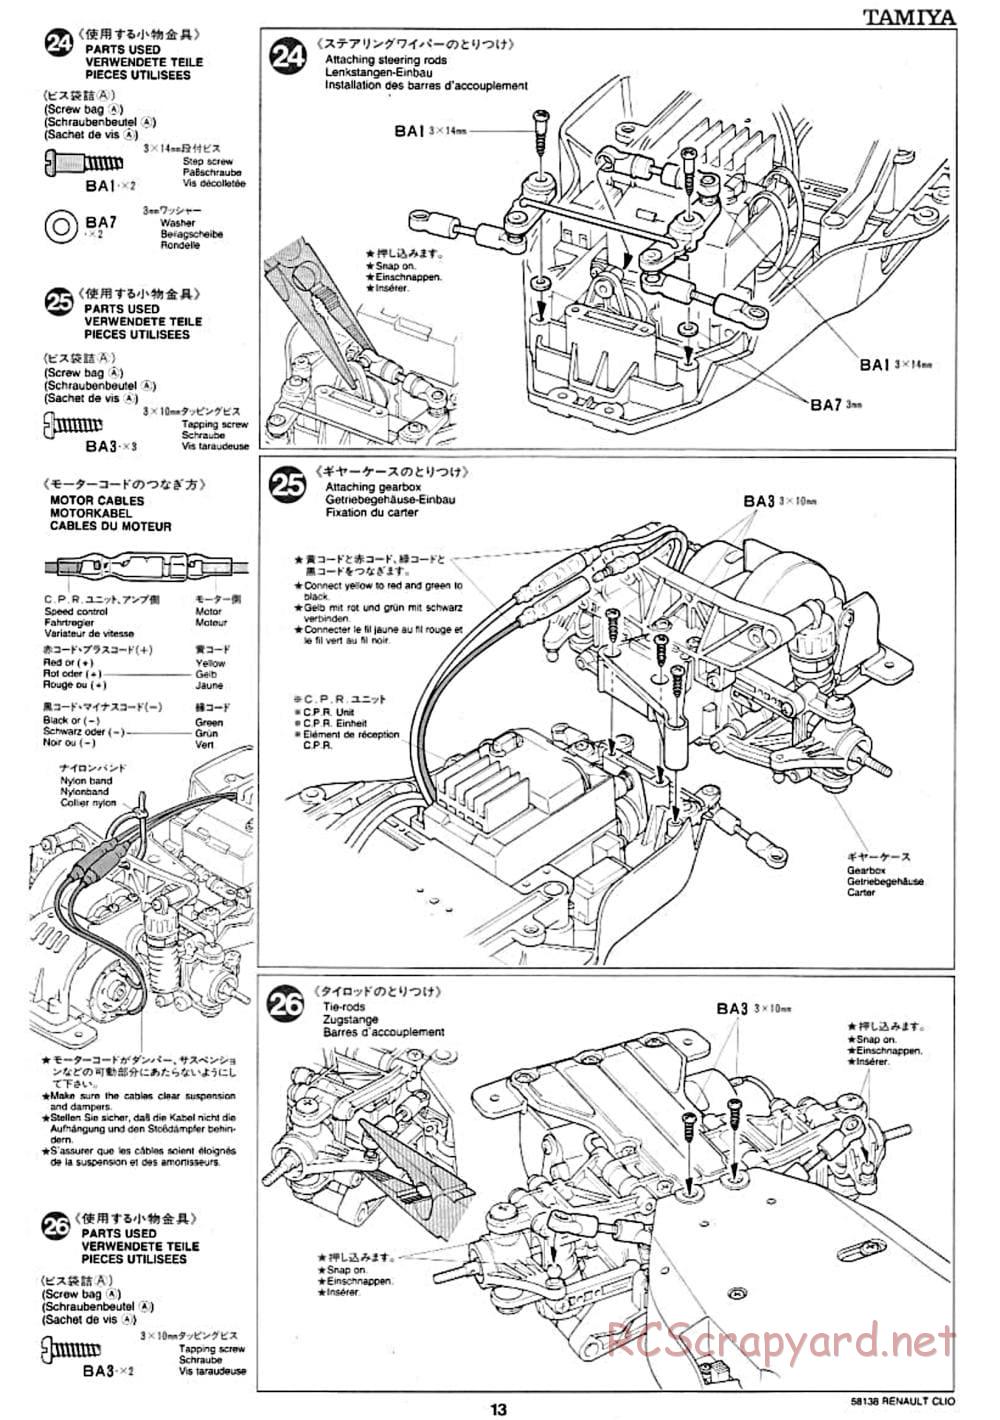 Tamiya - Renault Clio Williams Chassis - Manual - Page 13